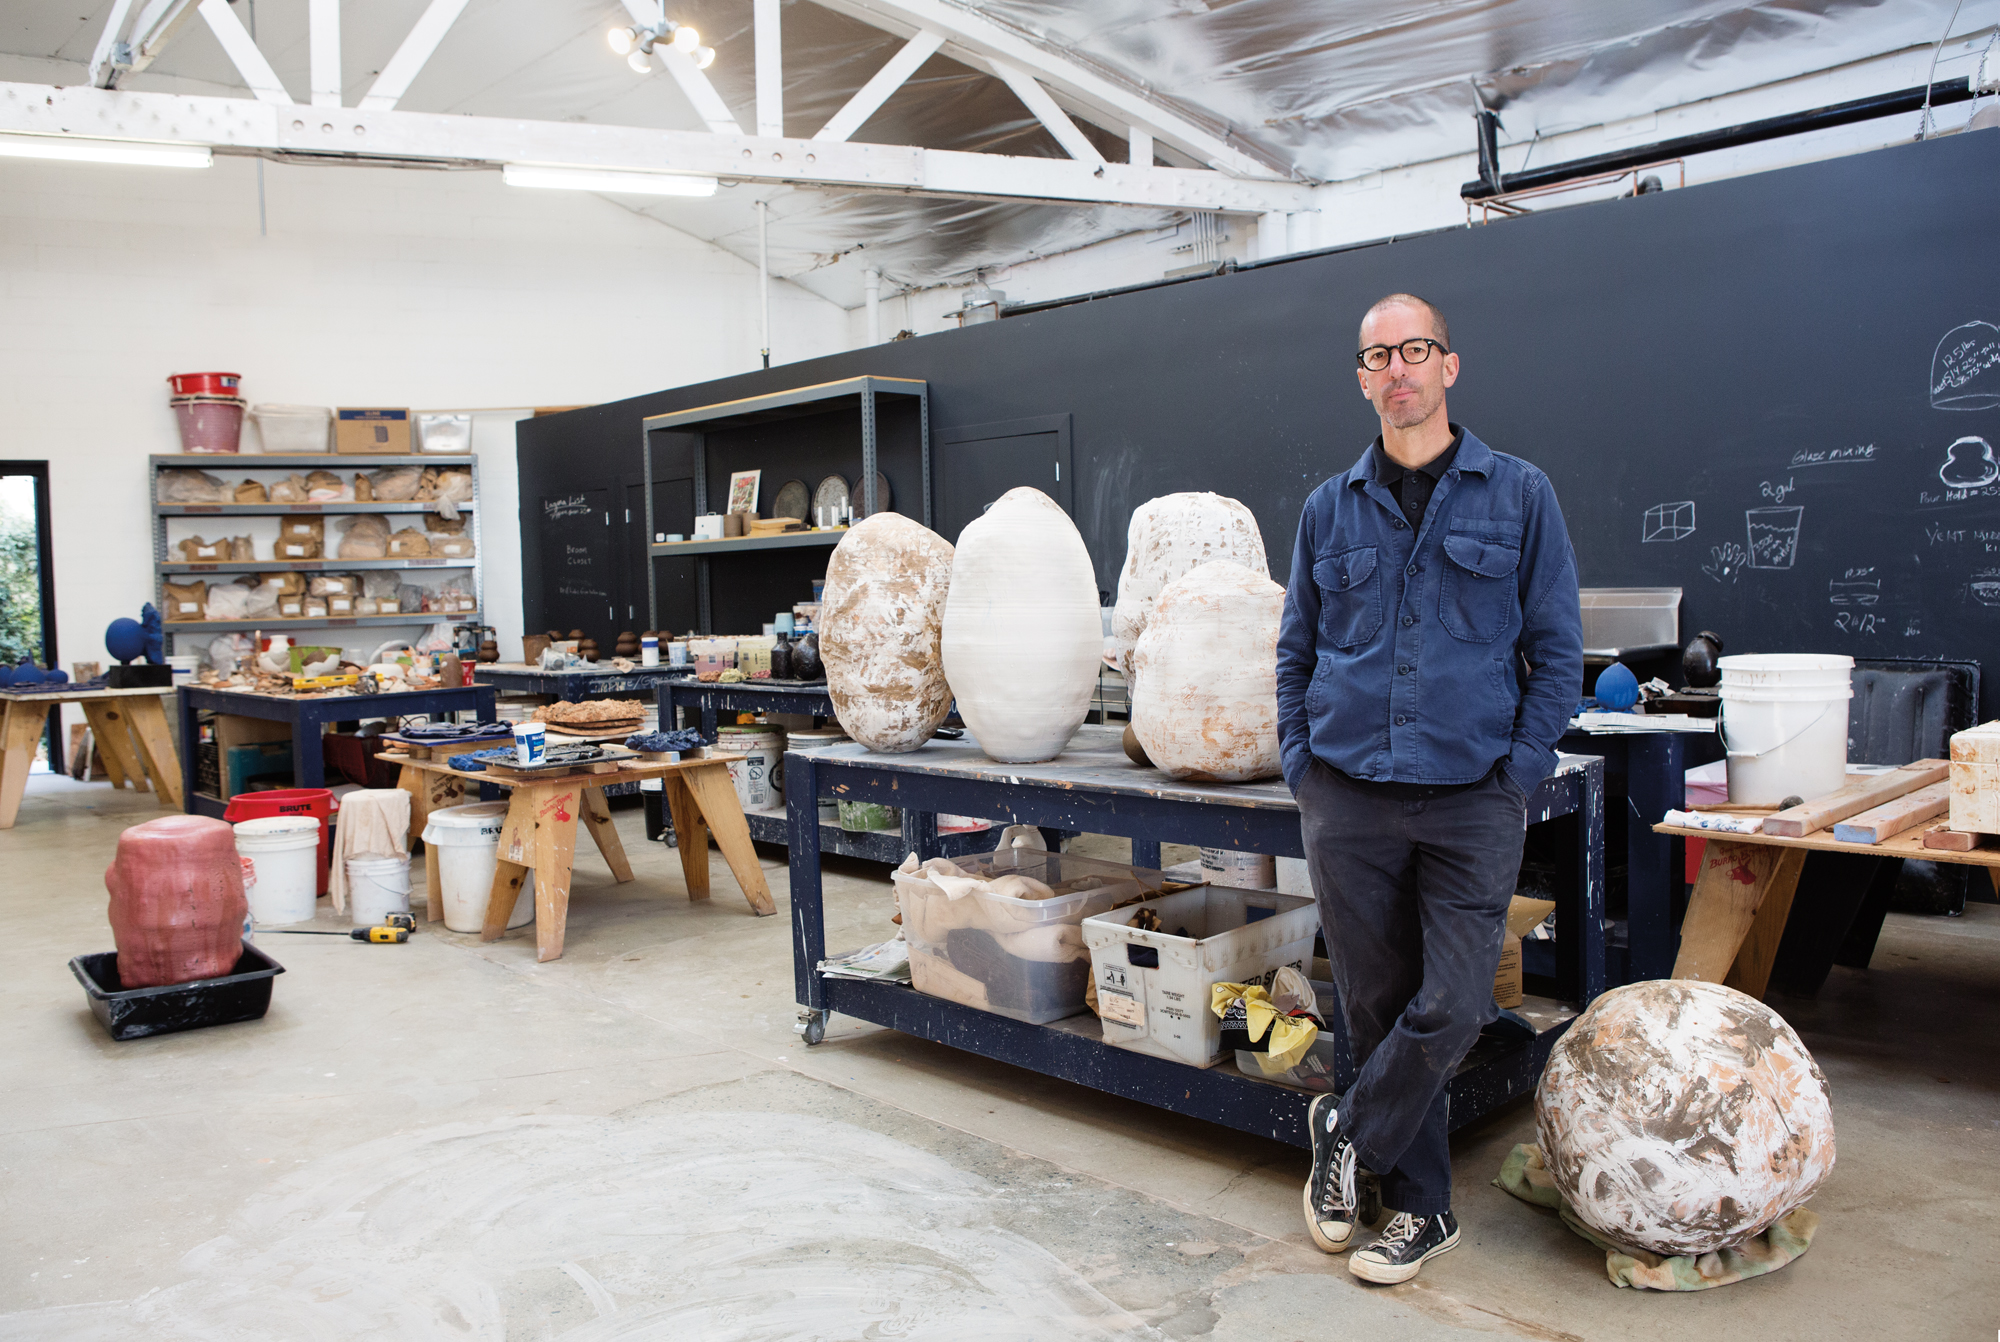 Adam Silverman Is Reshaping the Future of Ceramics - Galerie